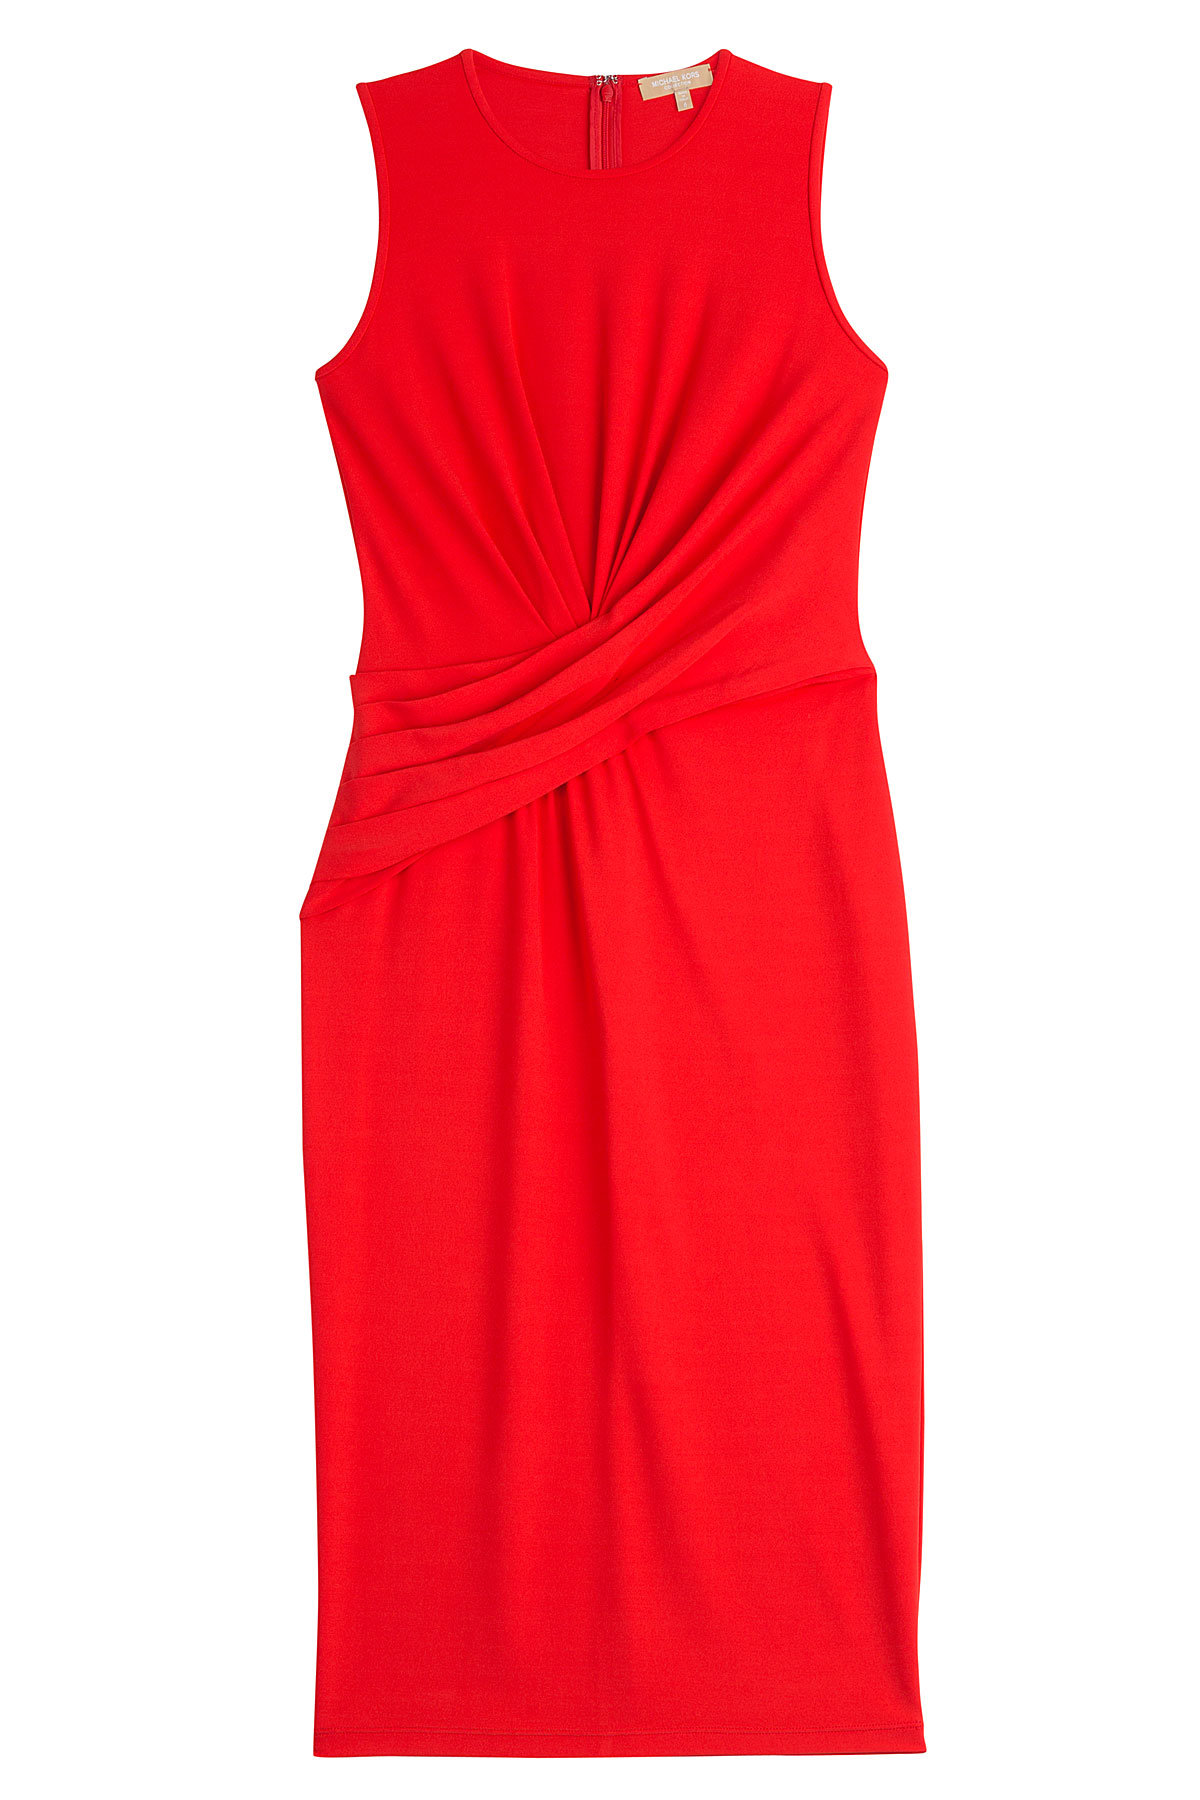 Michael Kors - Crepe Jersey Dress